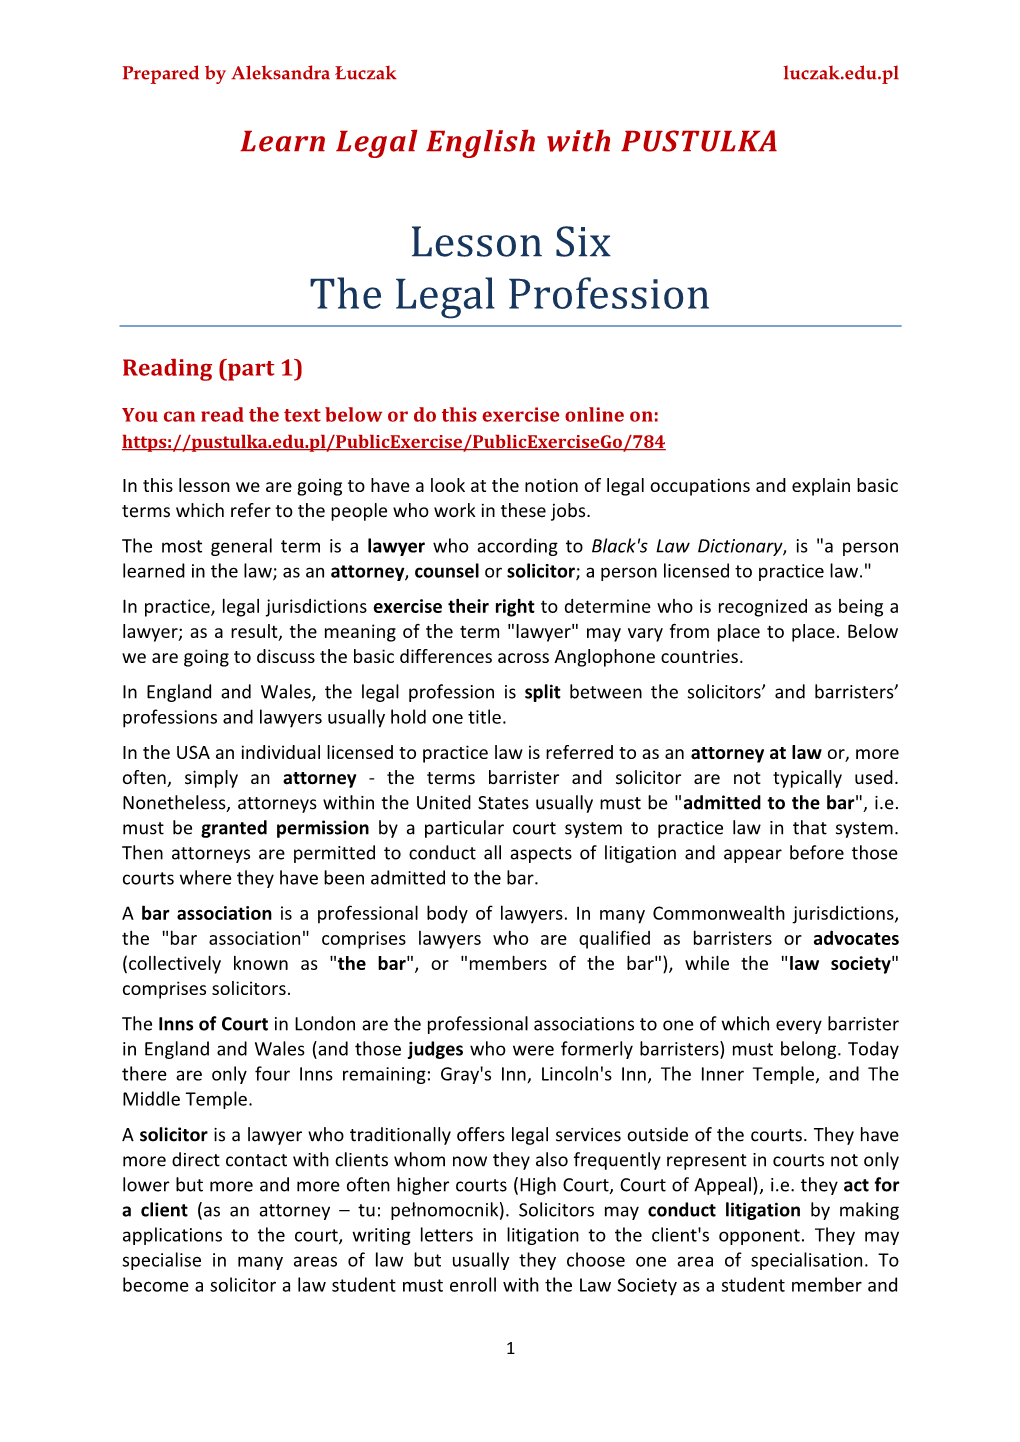 Lesson Six the Legal Profession